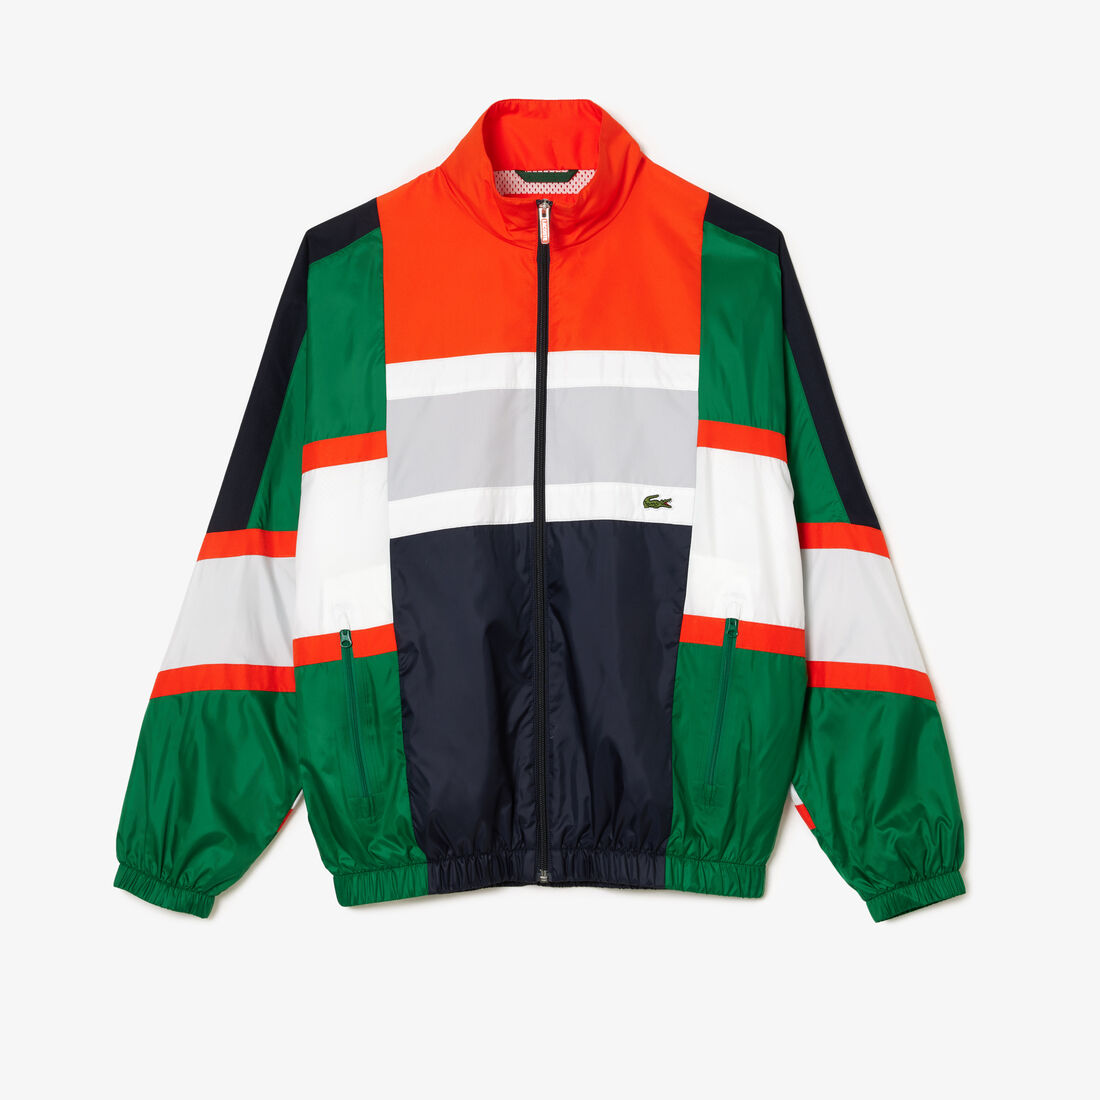 Mixed Material Colourblock Sportsuit Jacket - BH1582-00-QIU